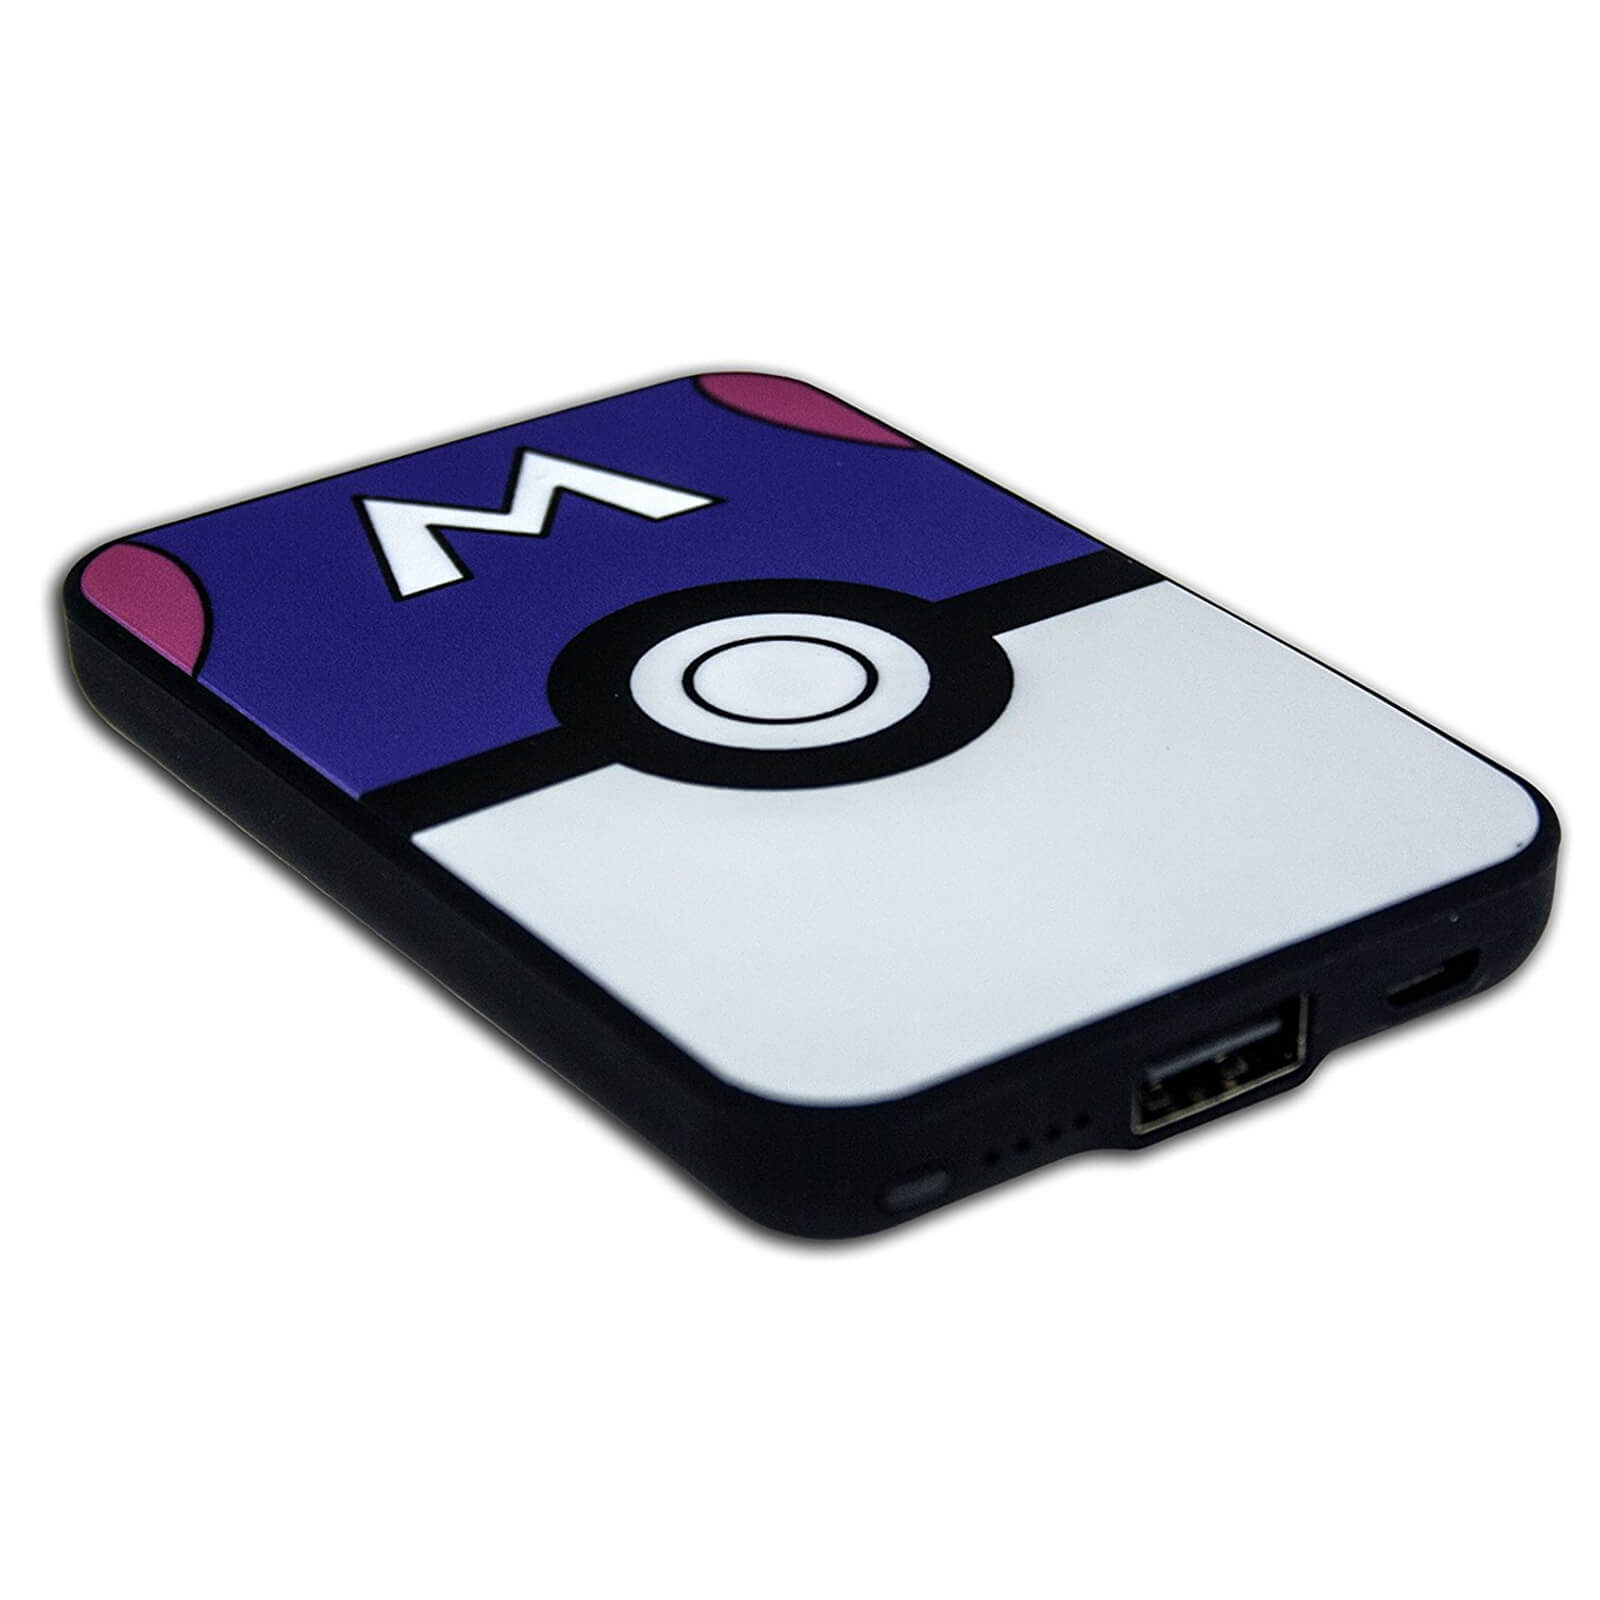 Pokemon Megaball Credit Card Sized Power Bank (5000mAh)